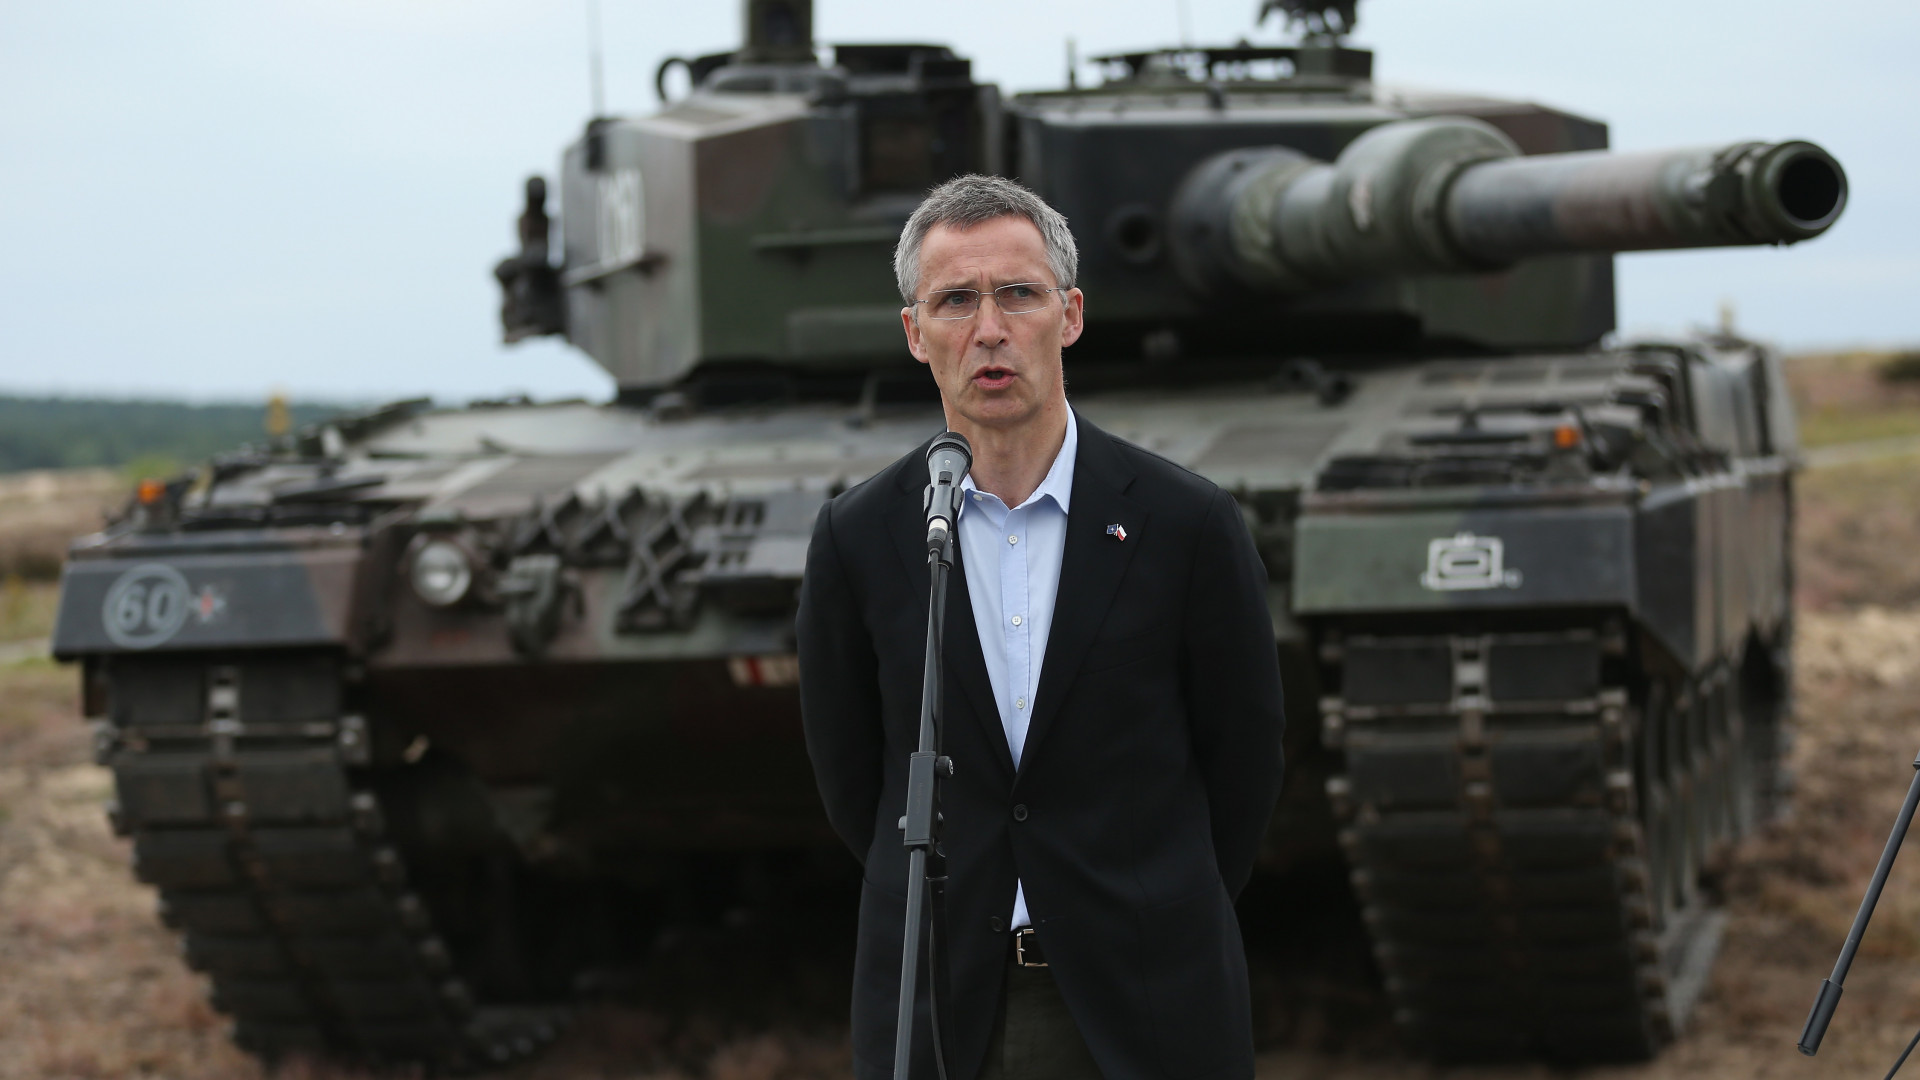 NATO Secretary General: Russia is behaving dangerously